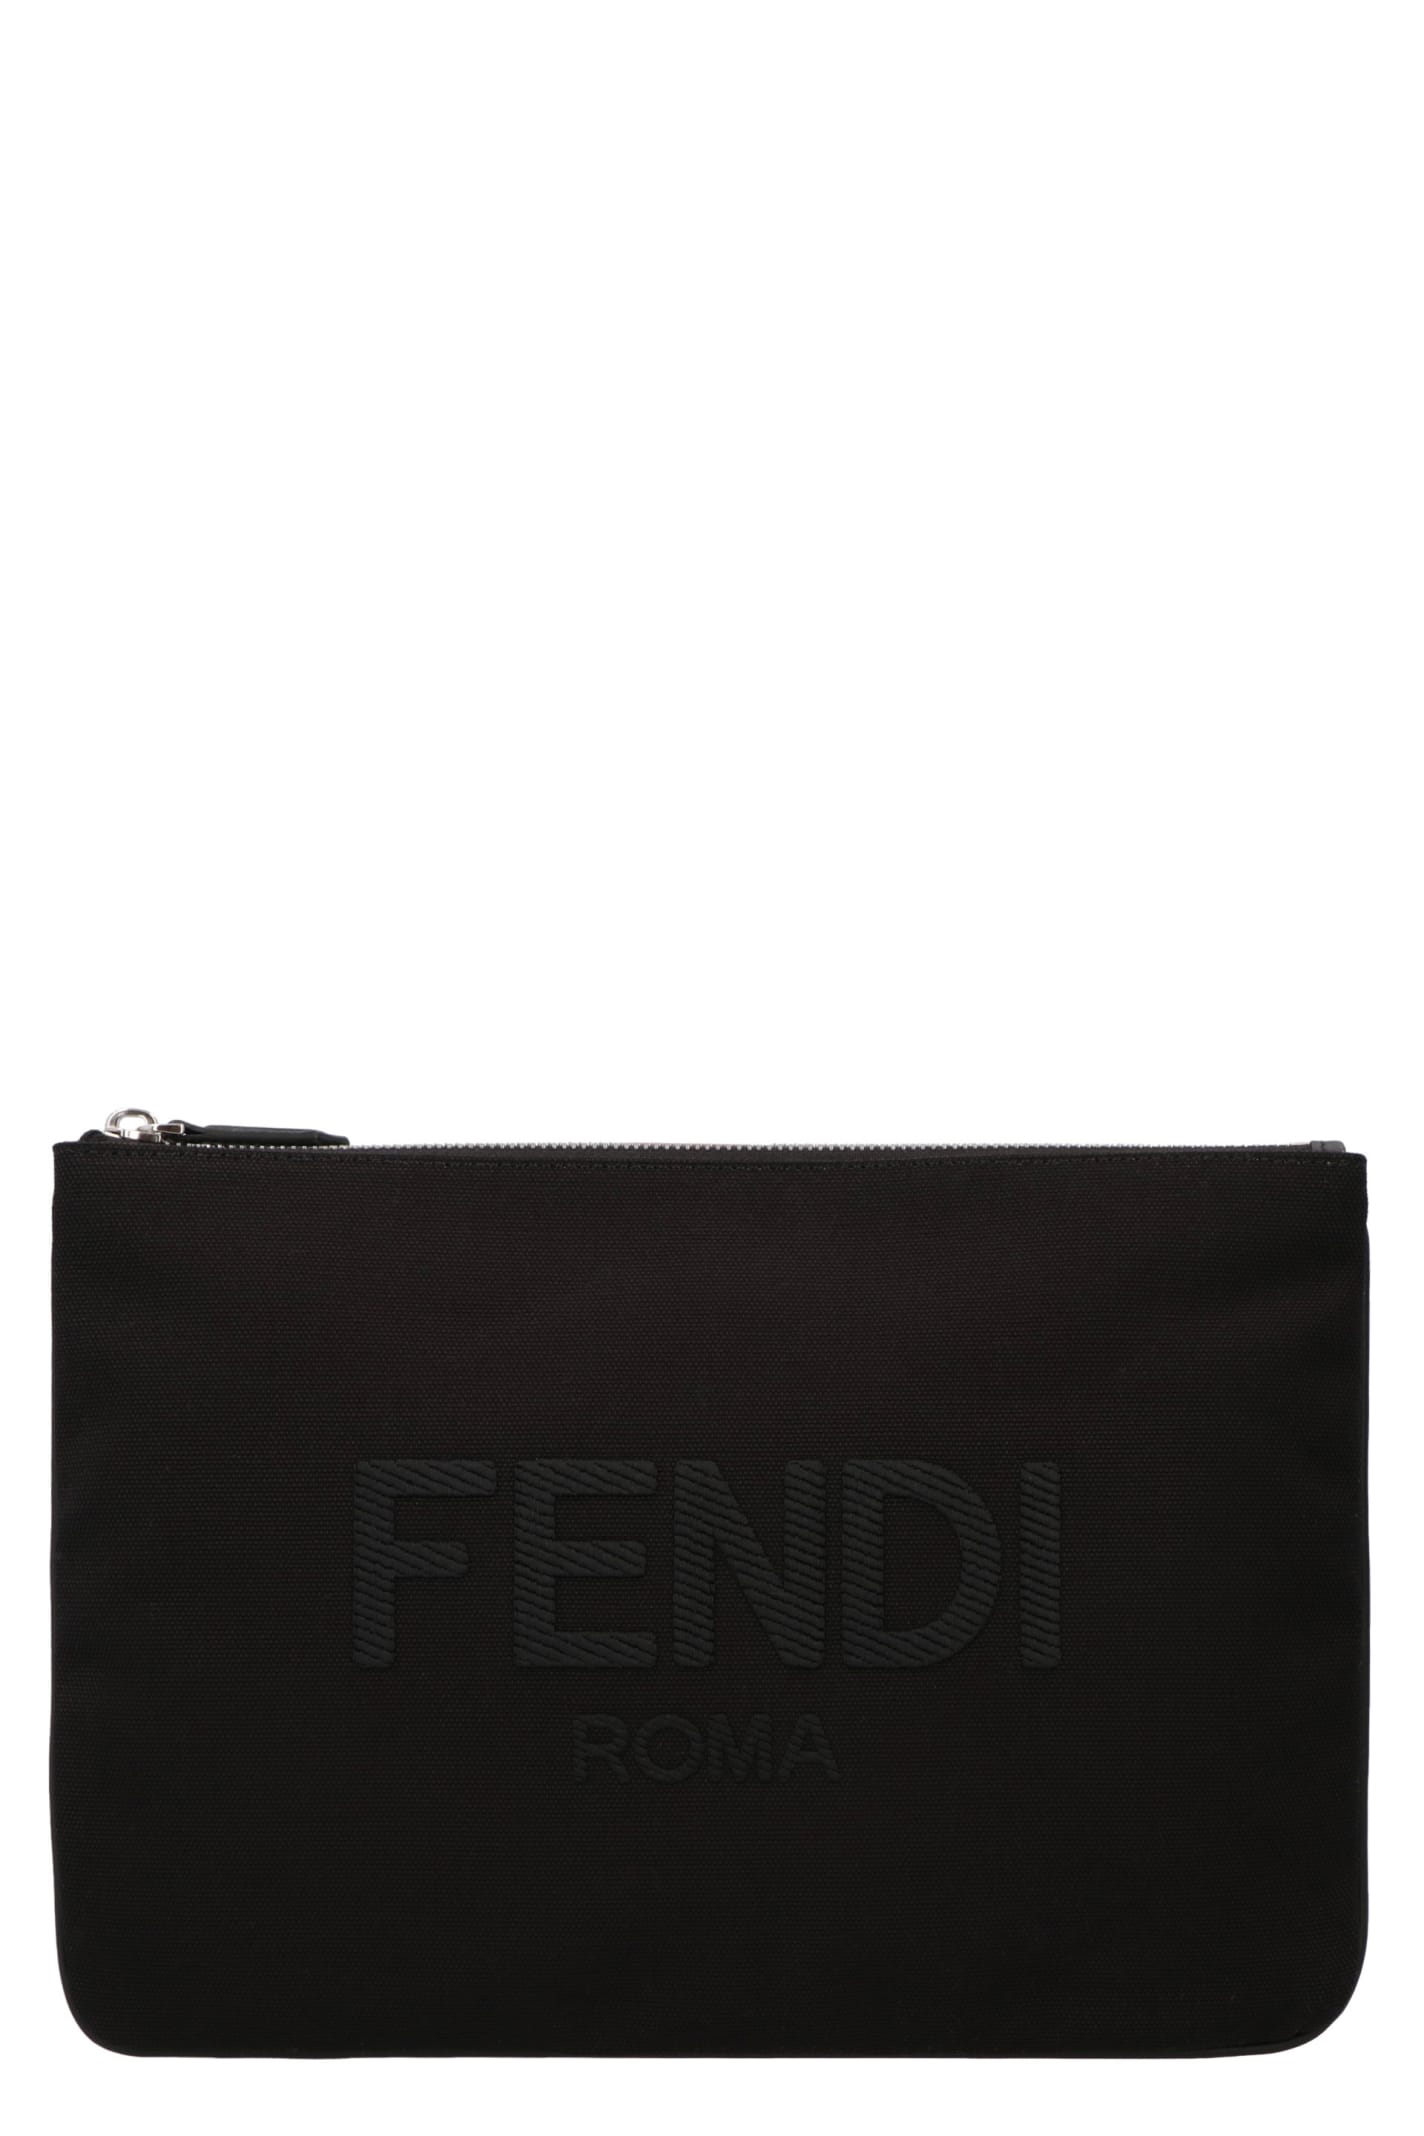 Fendi Logo Print Flat Pouch In Black